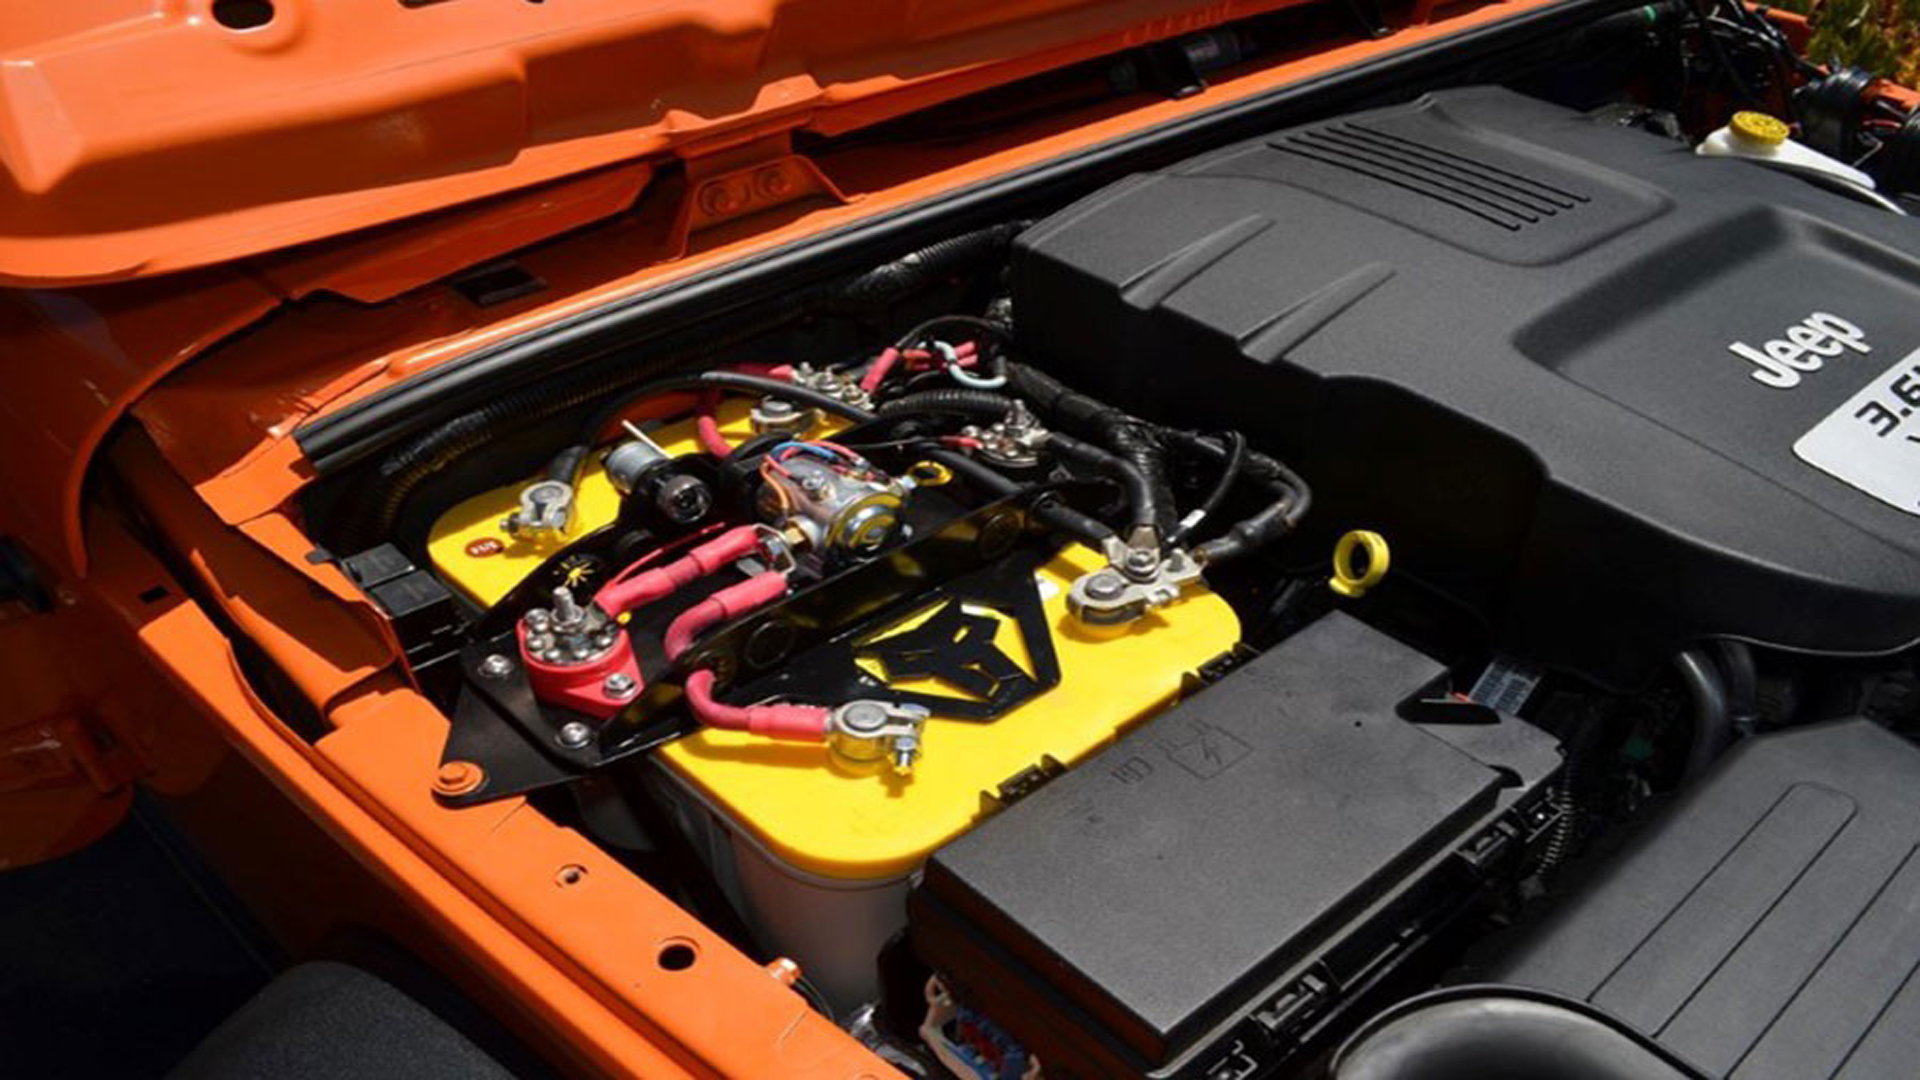 Jeep Wrangler JK: How to Install Dual Battery Kit | Jk-forum